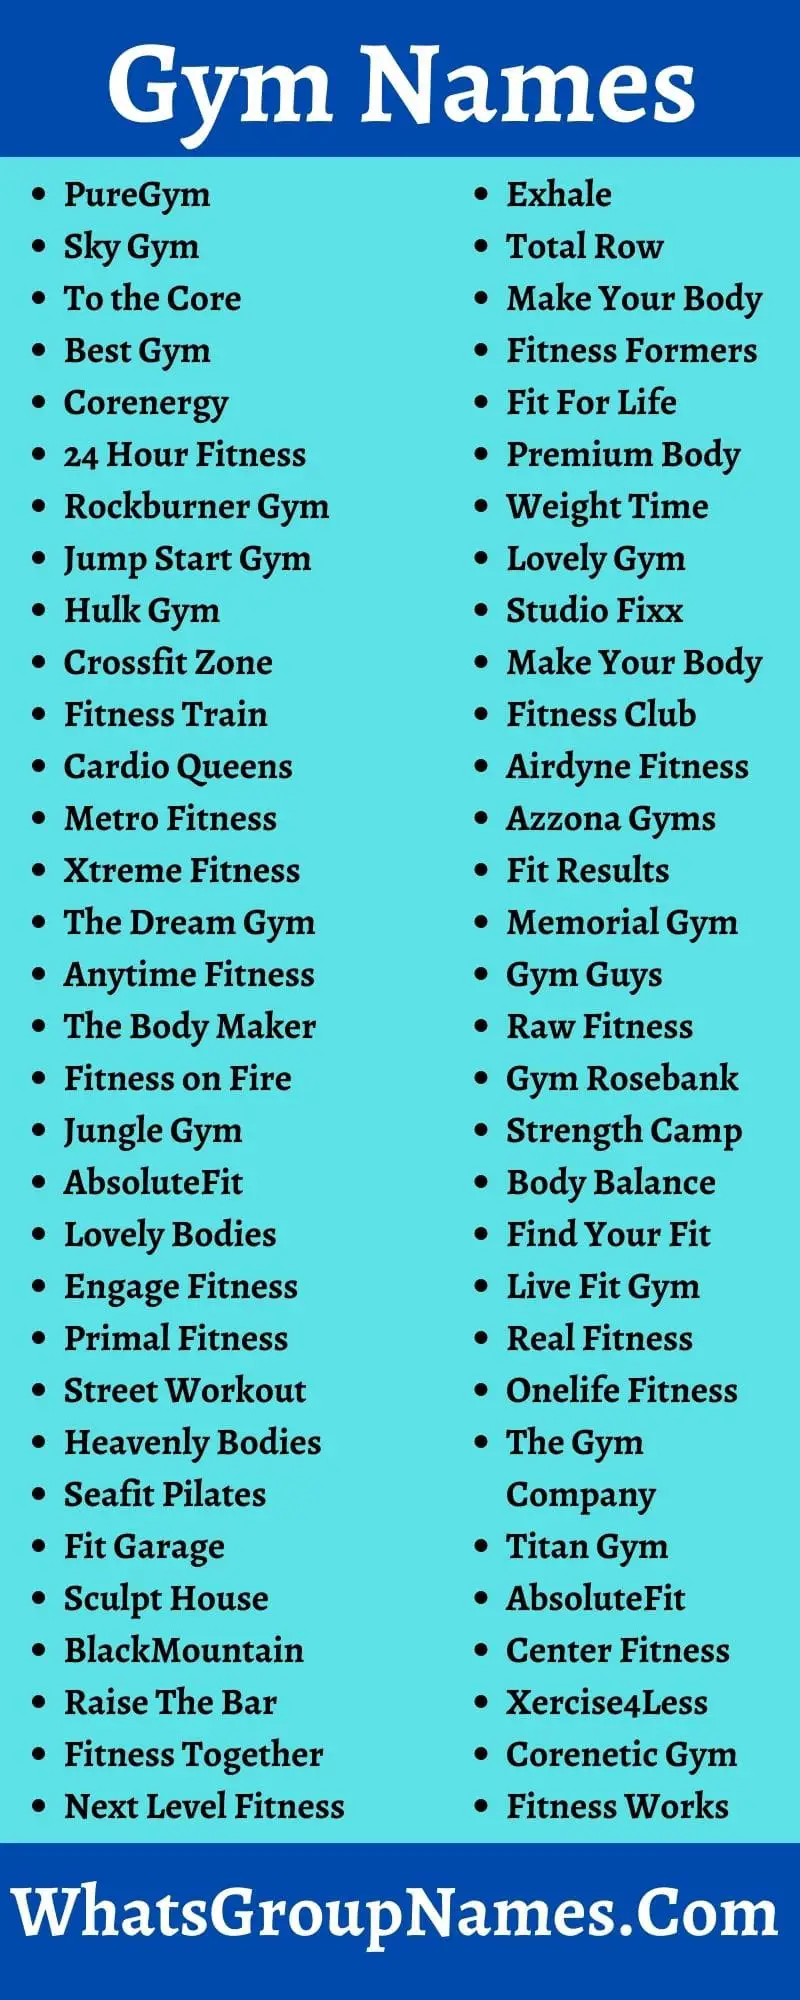 Gym Names